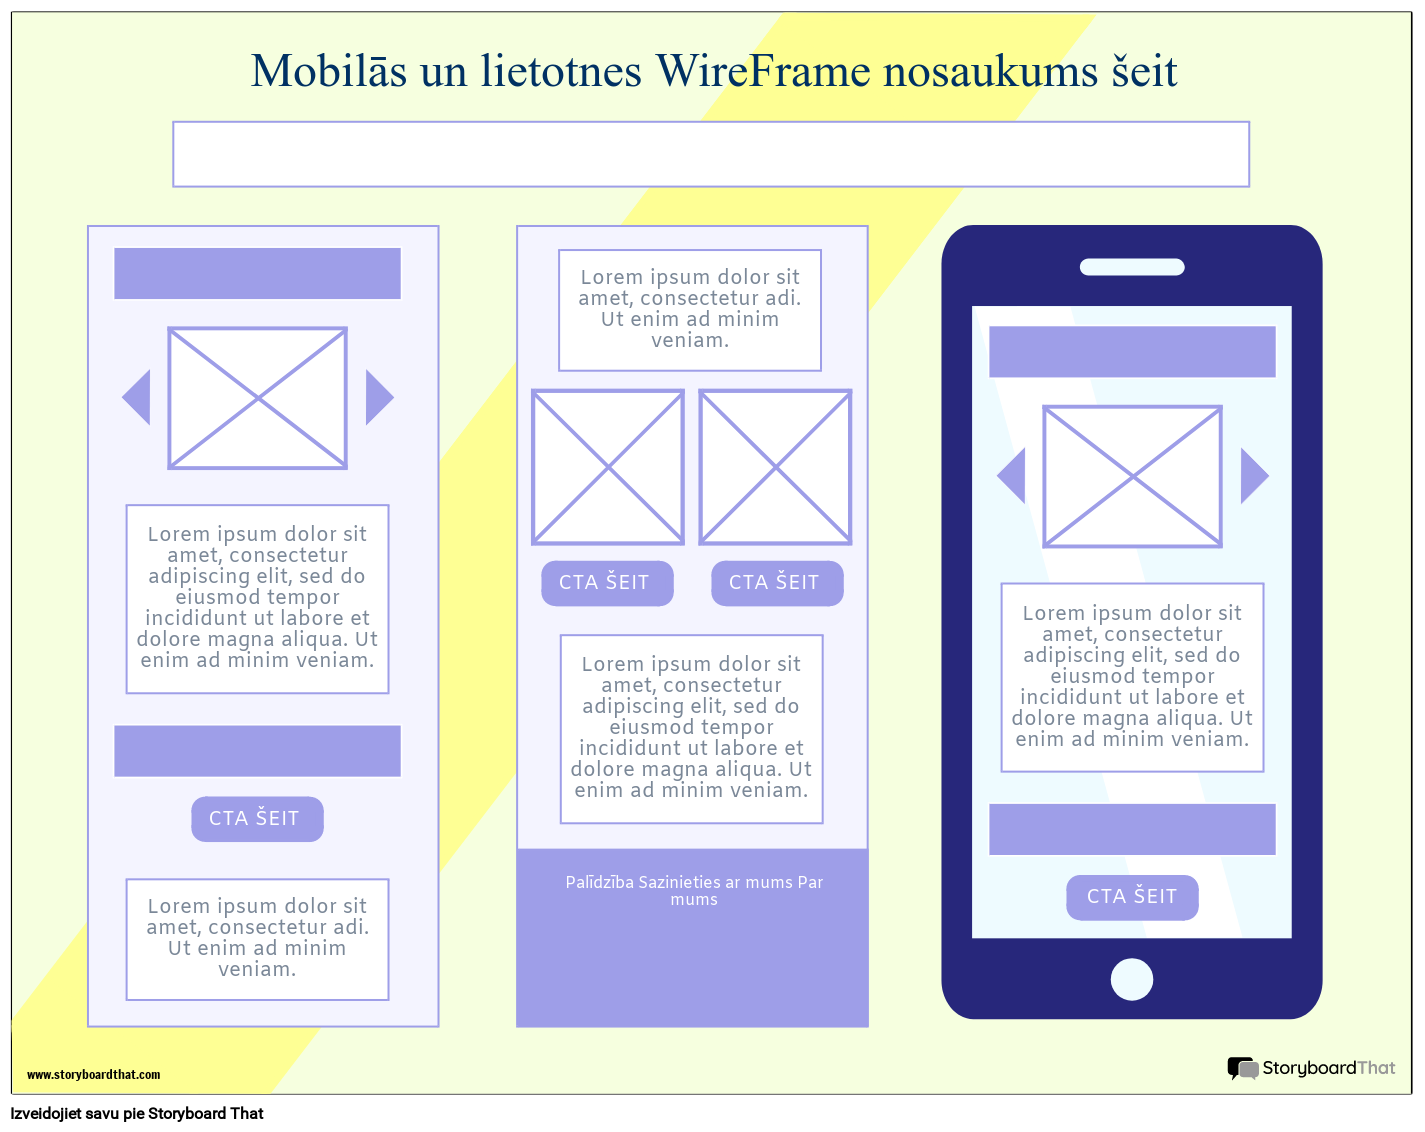 Corporate Mobile WireFrame 3. veidne